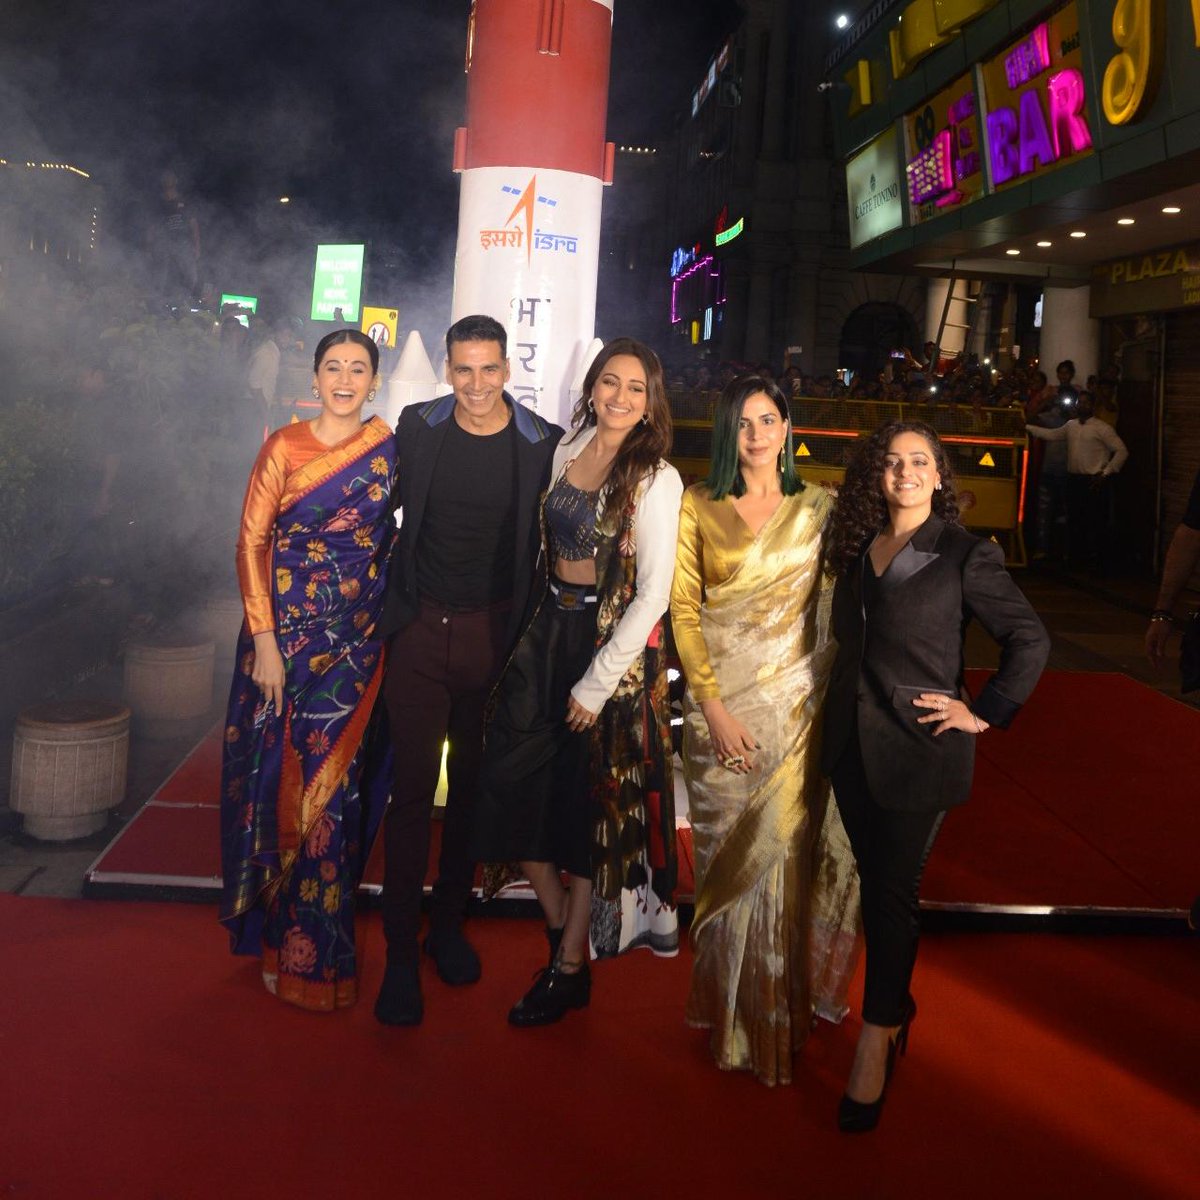 Mission Mangal is Ready for Take Off!
🚀🤩
The cast of #MissionMangal is snapped on the red carpet of their premiere!
.⠀
.⠀

.⠀

#AkshayKumar #TaapseePannu #SonakshiSinha #VidyaBalan #KirtiKulhari #ISRO #BollywoodPremiere #RedCarpet #BlastOff # BoxOfficeHit #Space #Rockets